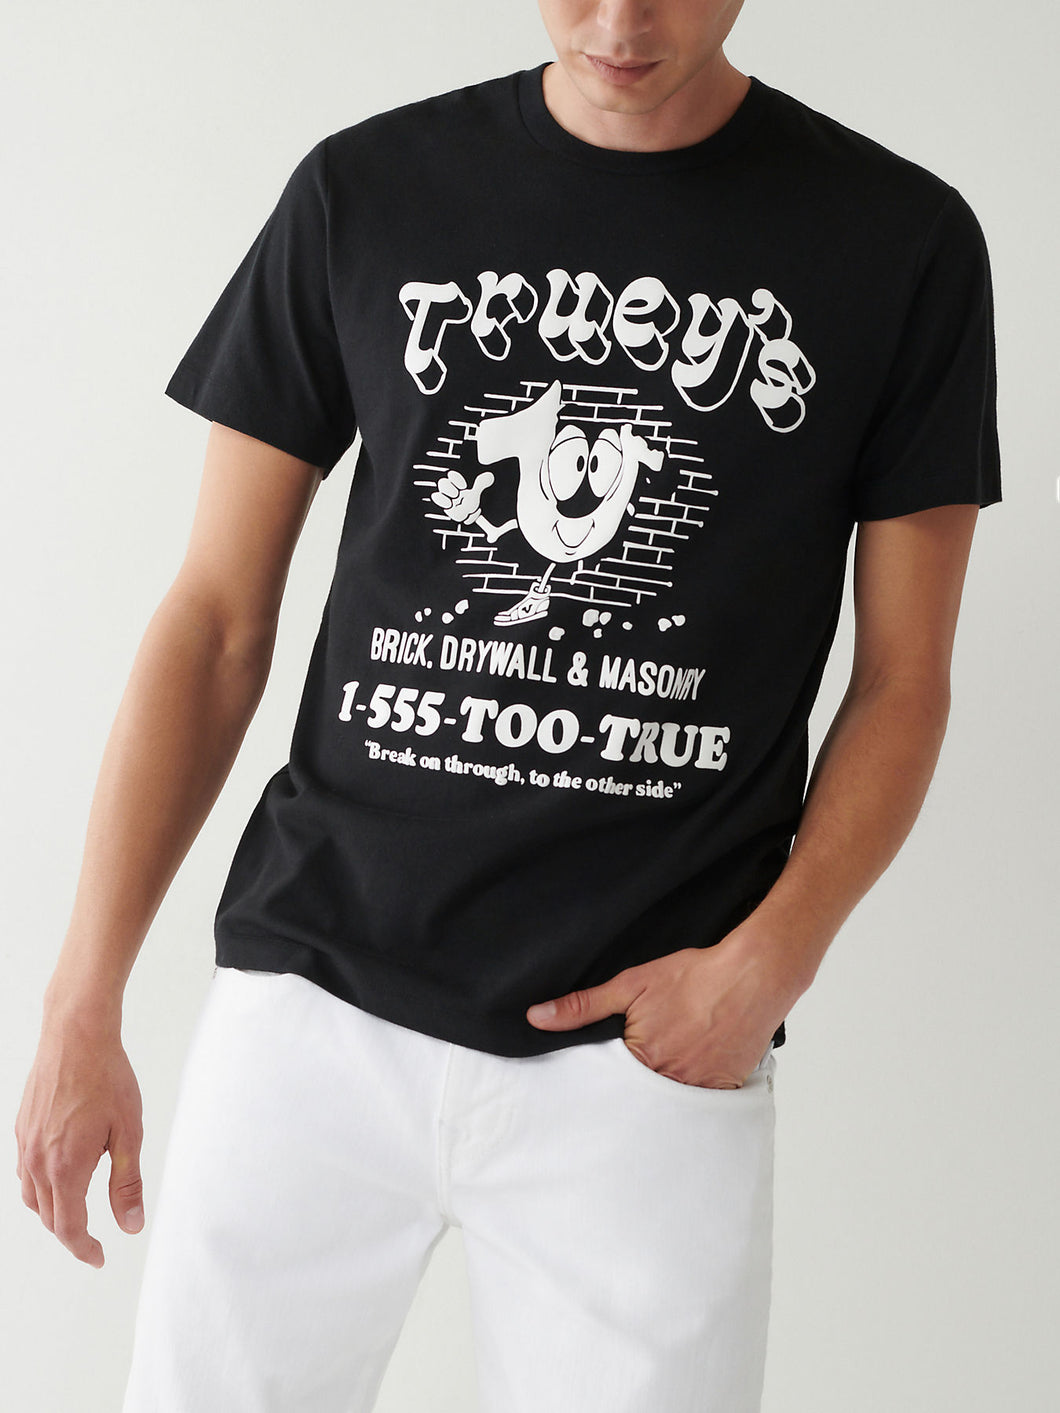 True Religion, Cool Truey Logo Graphic Aross The Front.